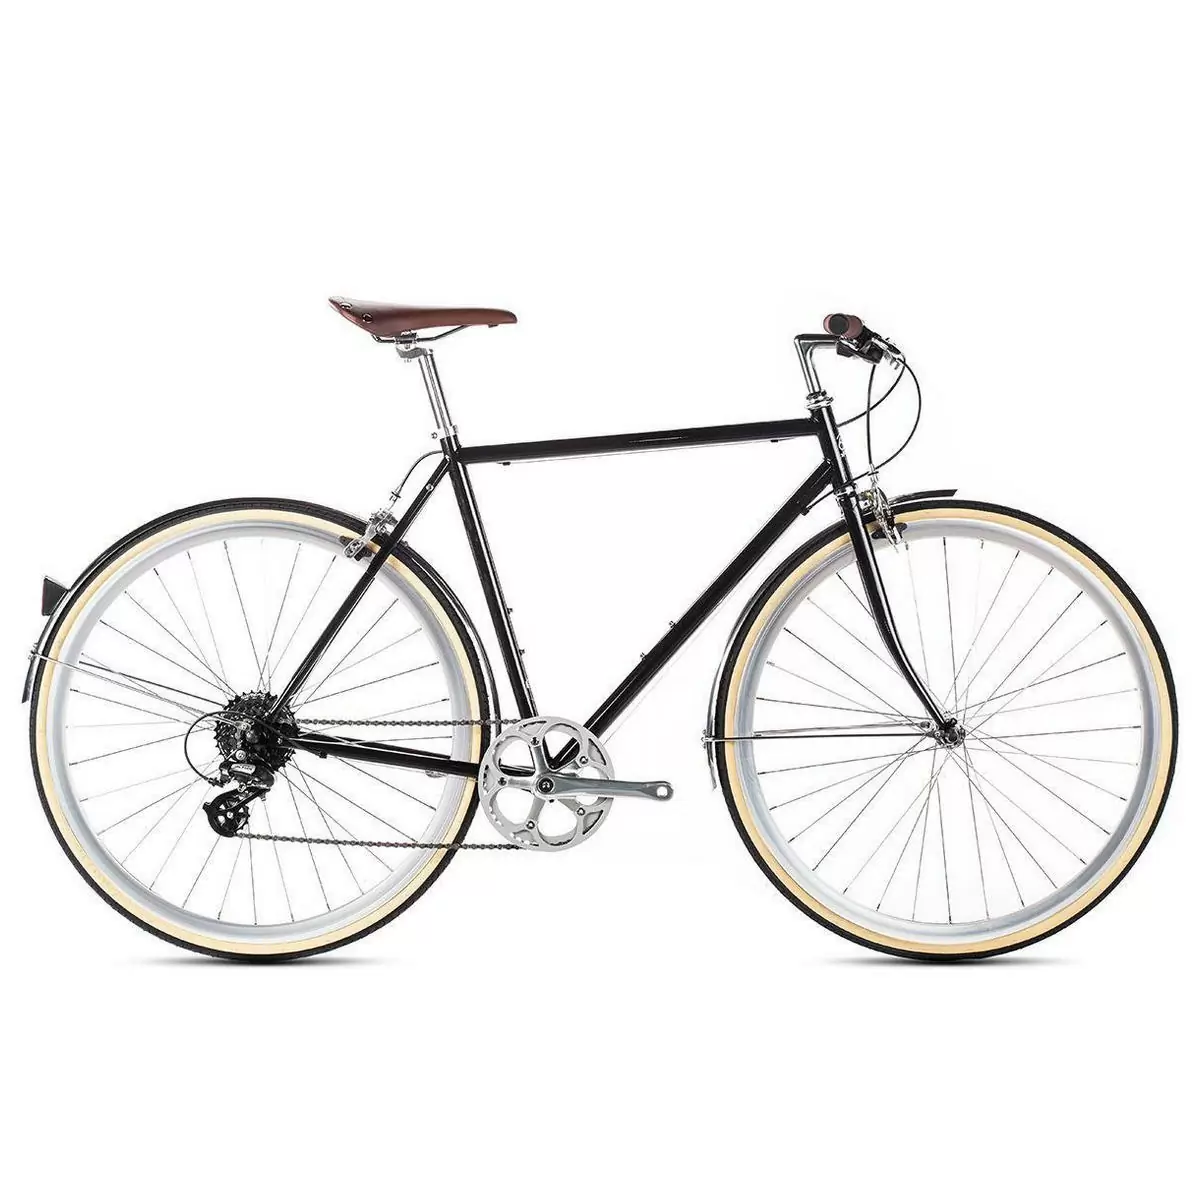 Bicicleta urbana ODYSSEY 8spd Delano preta grande 58cm - image